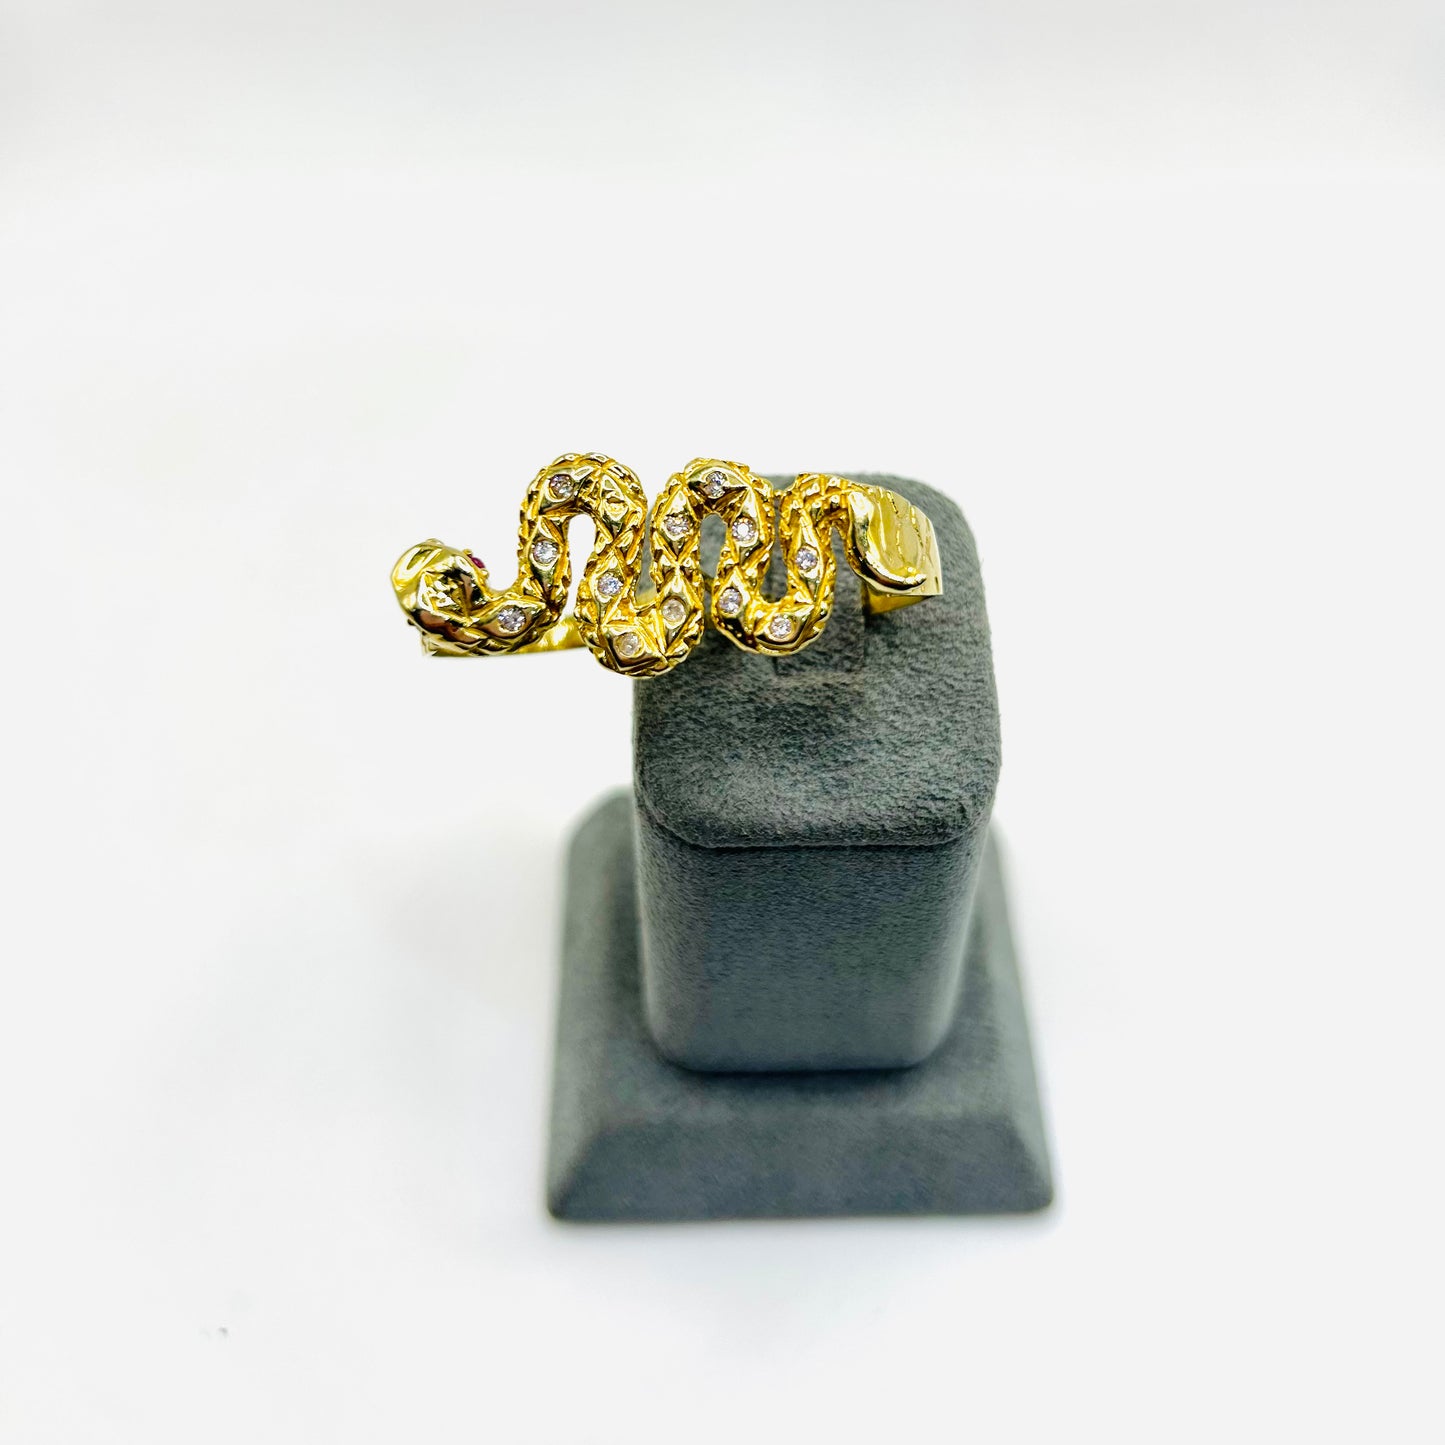 10K Gold 2-Finger Snake Ring with CZ